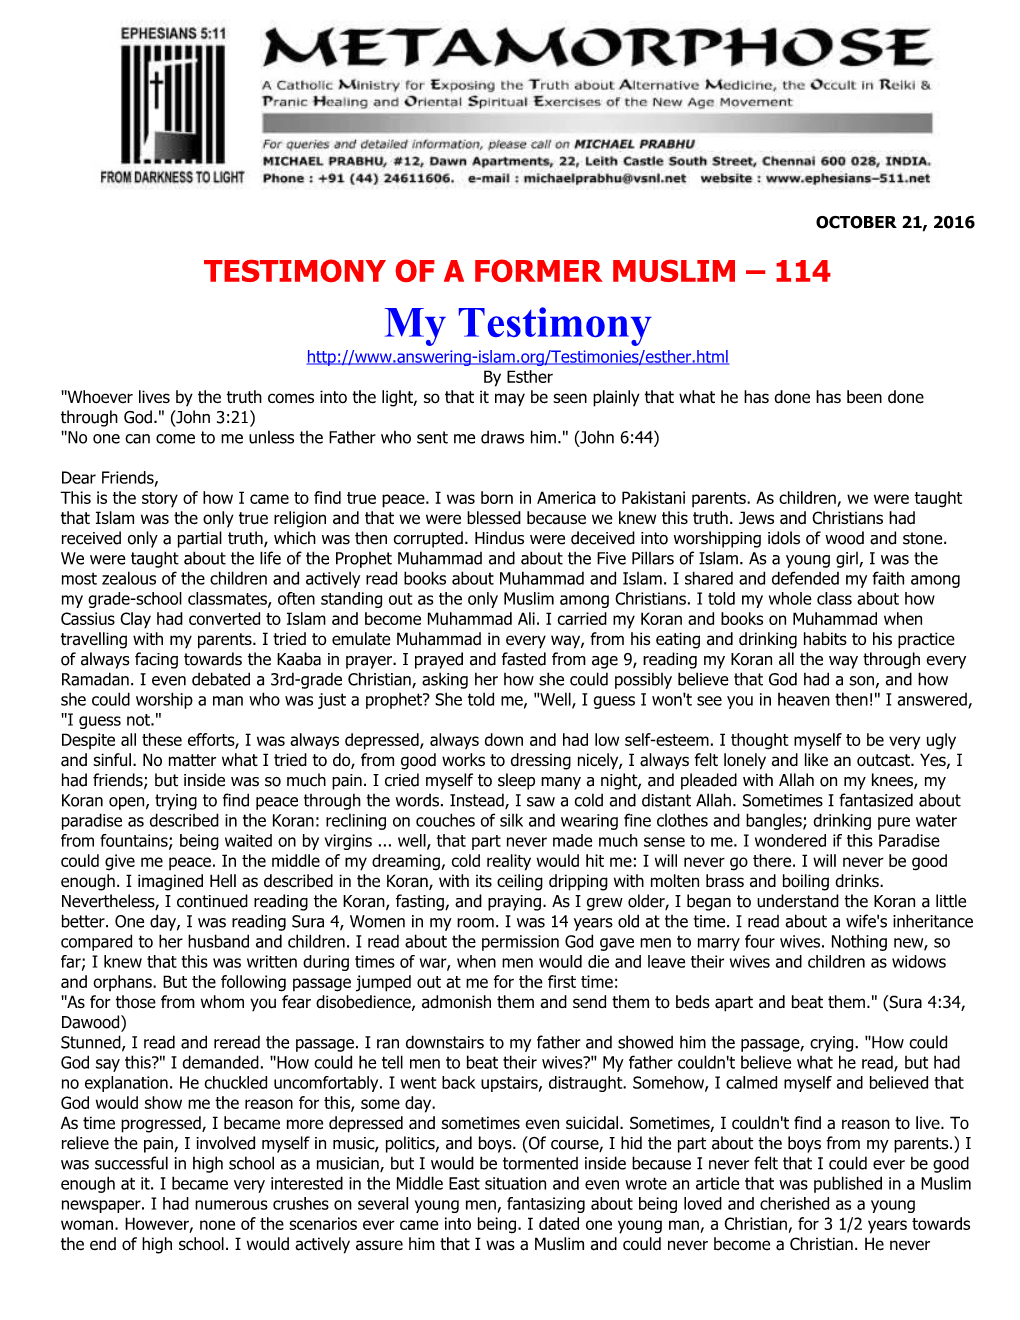 Testimony of a Former Muslim 114